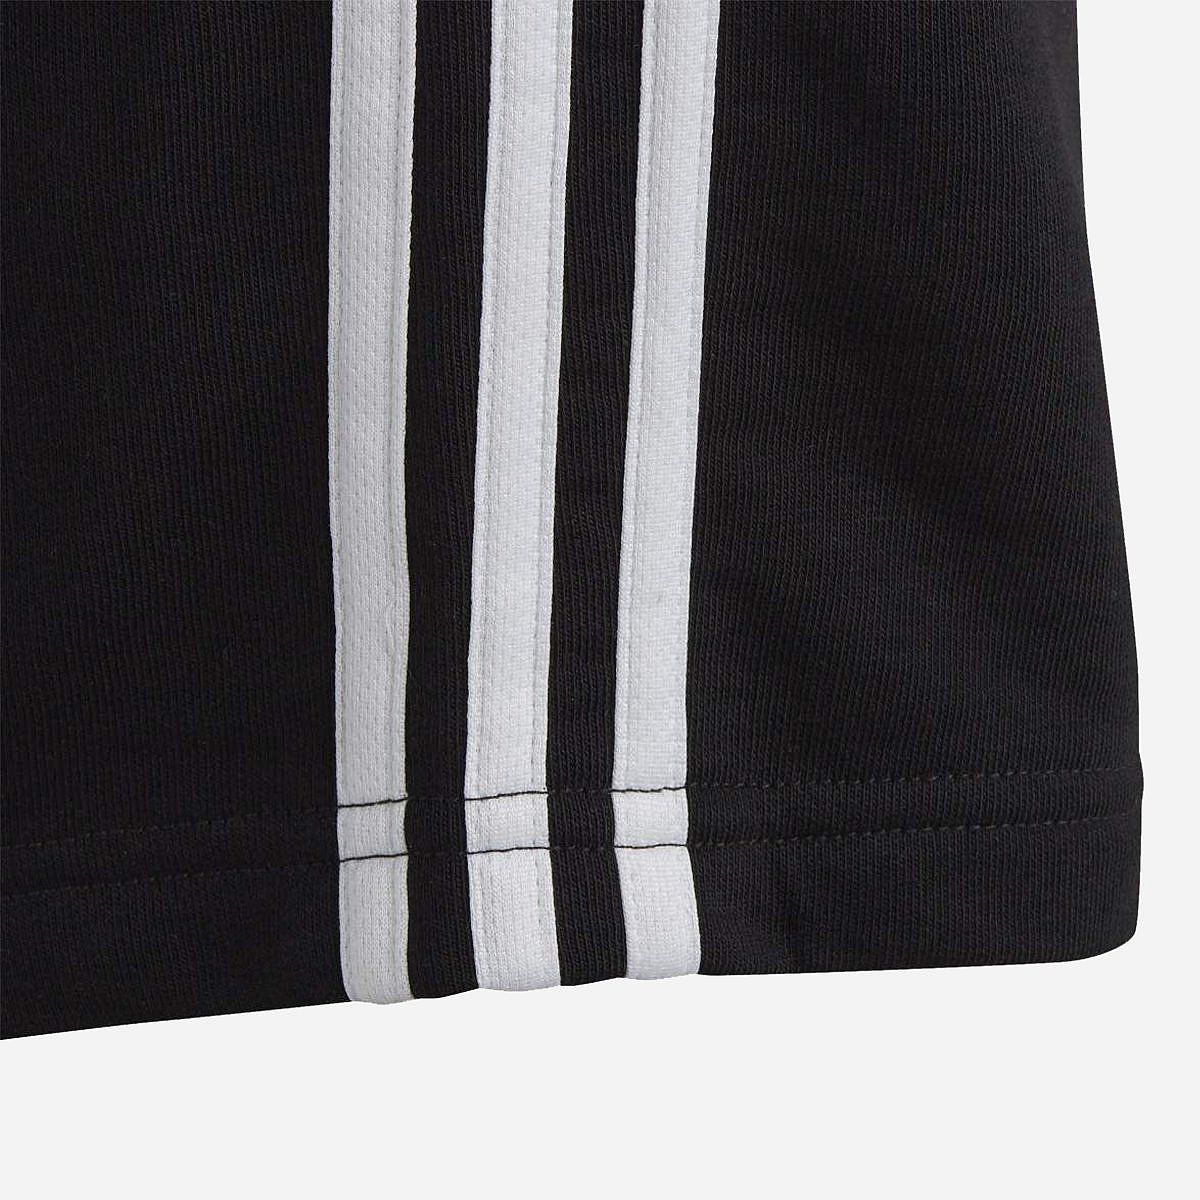 AN298516 Essentials 3-Stripes Cotton Shorts